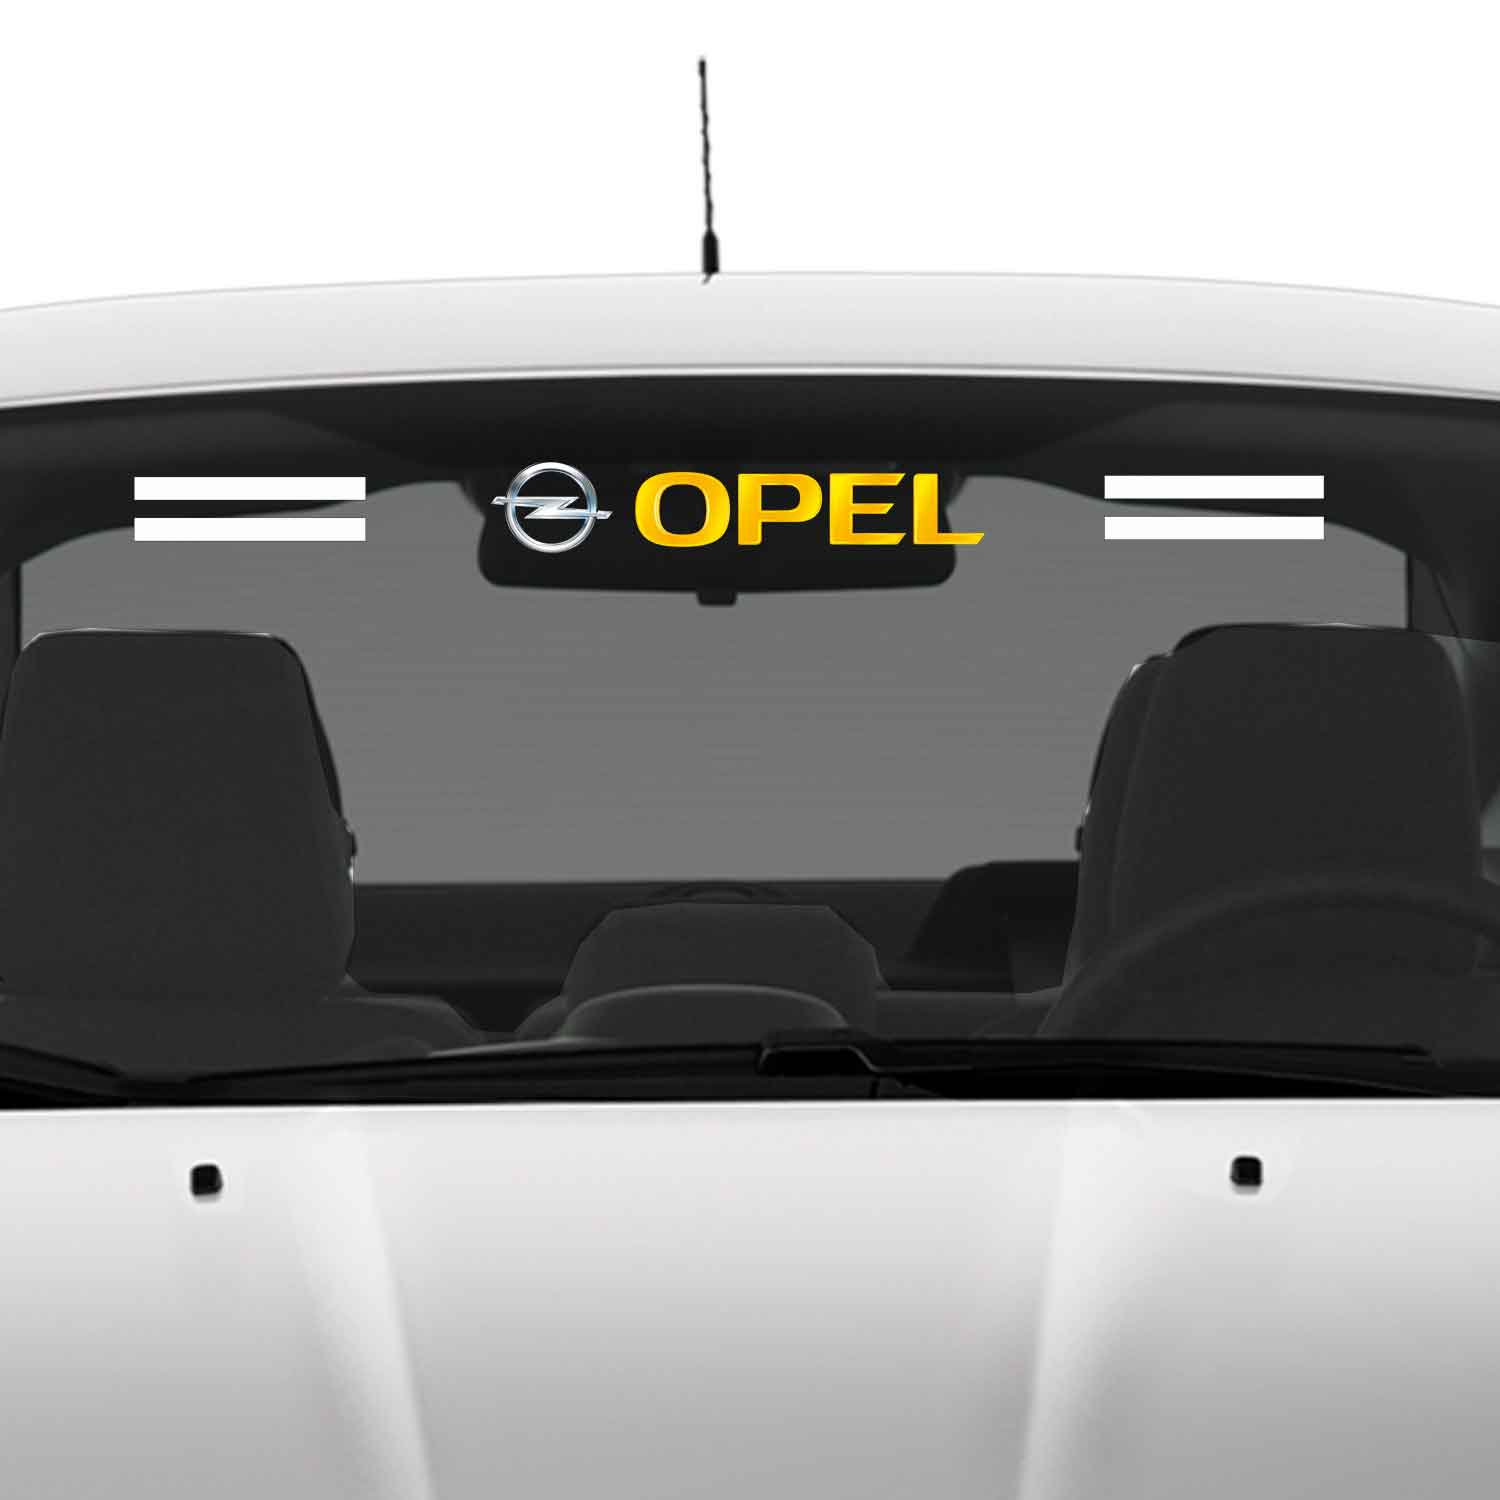 Opel cam sticker - Opel Ön Arka Cam Uyumlu Sticker